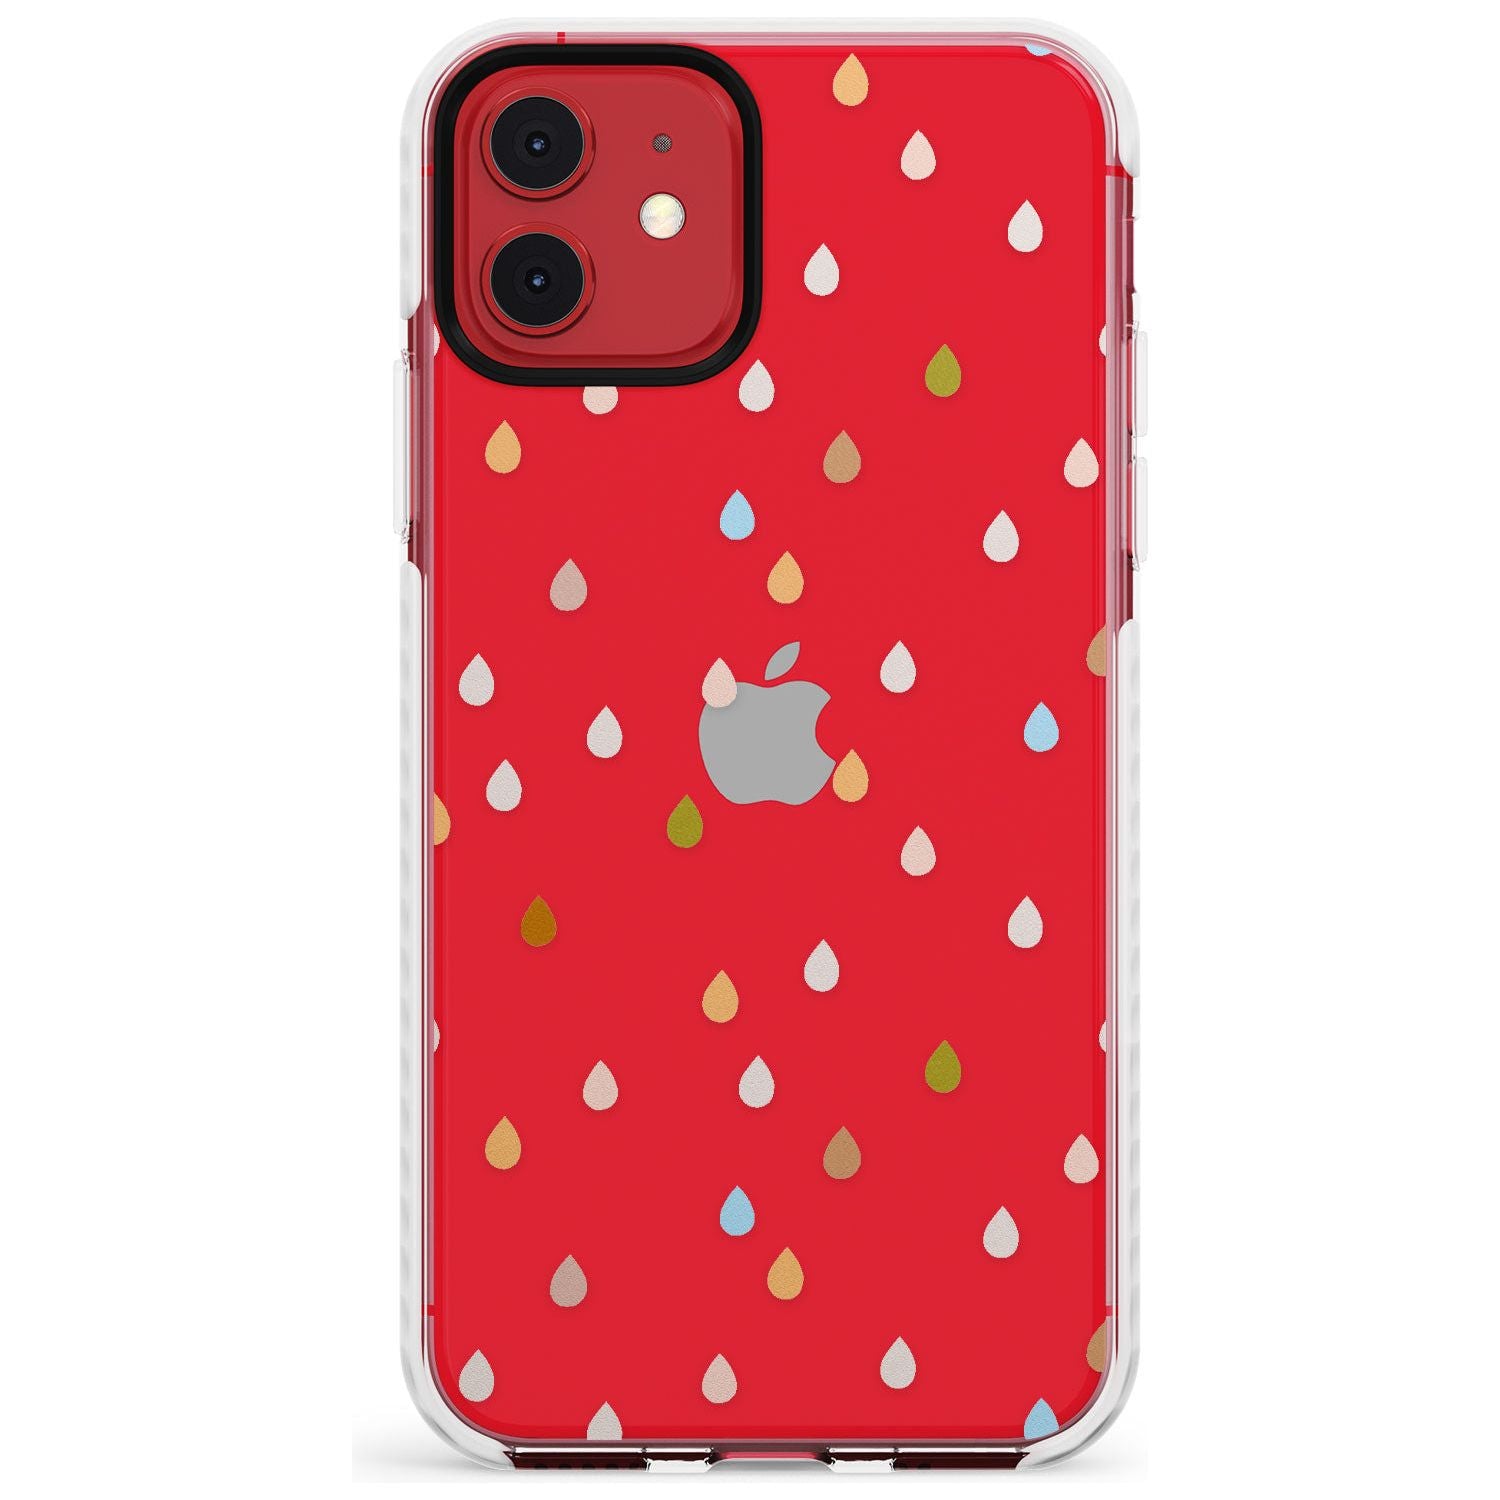 Raindrops Slim TPU Phone Case for iPhone 11